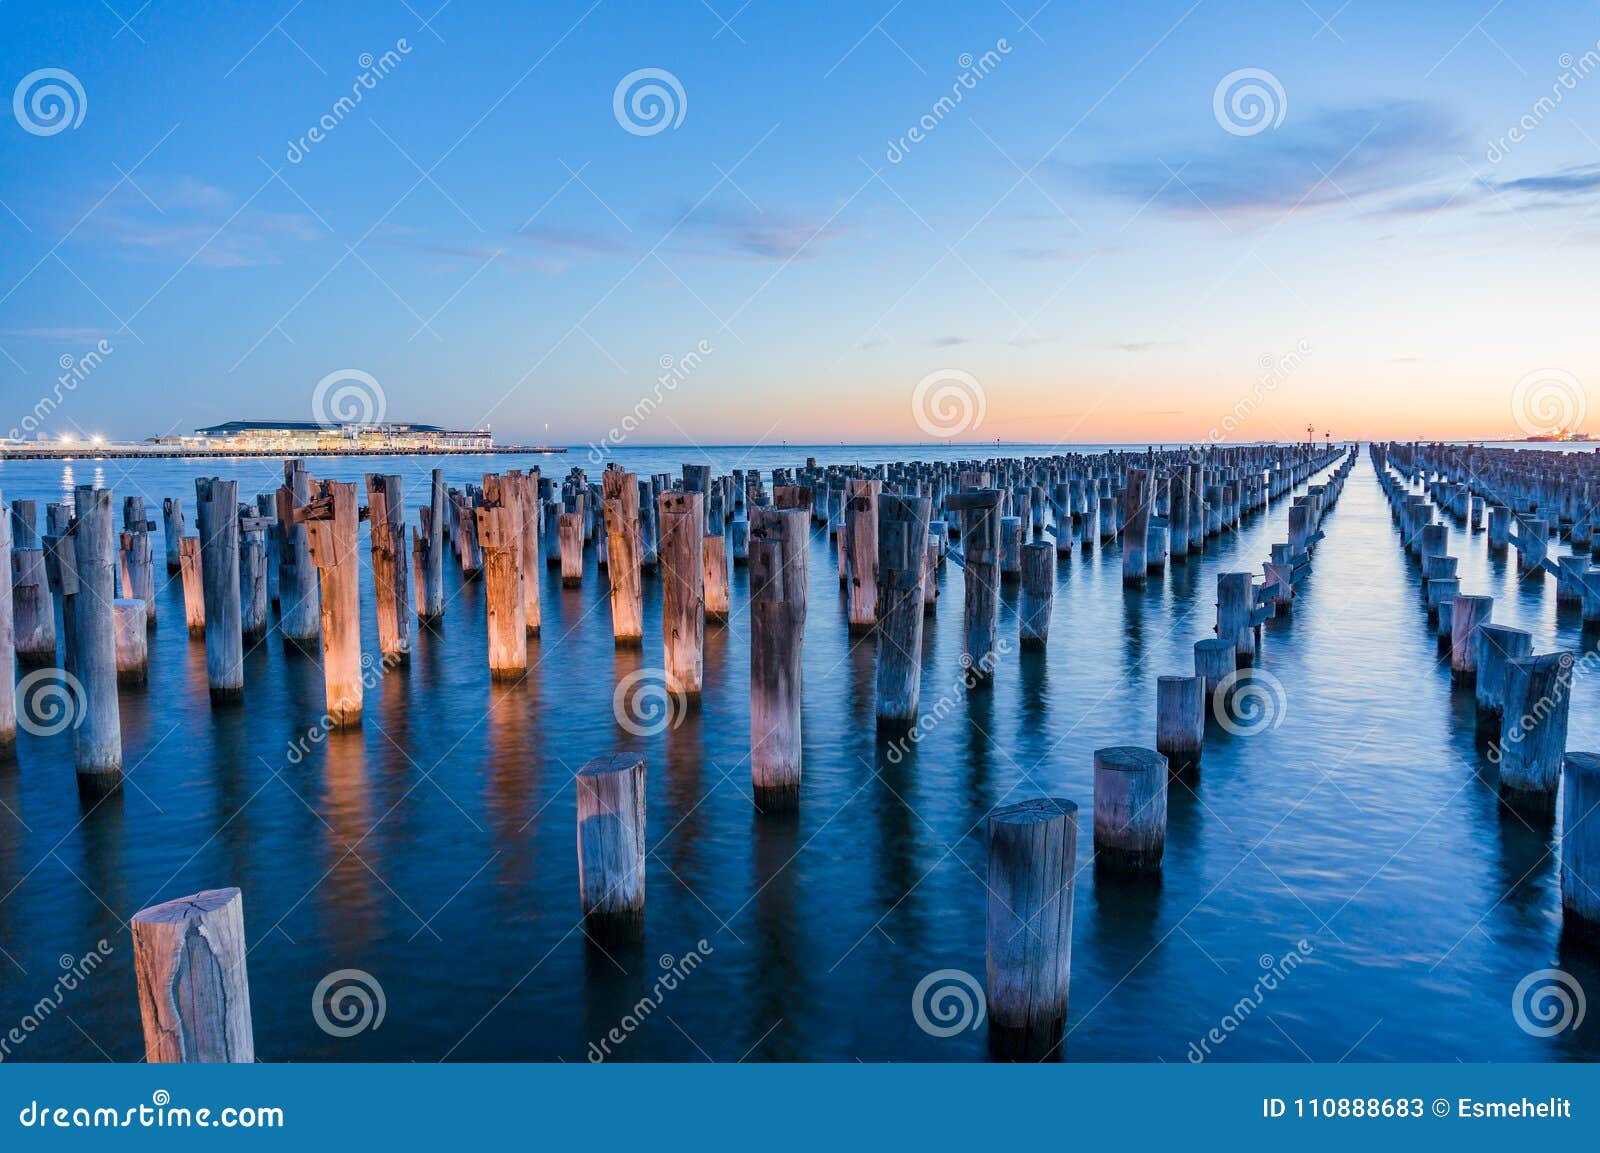 old wooden pylons of historic princes pier in port melbourne